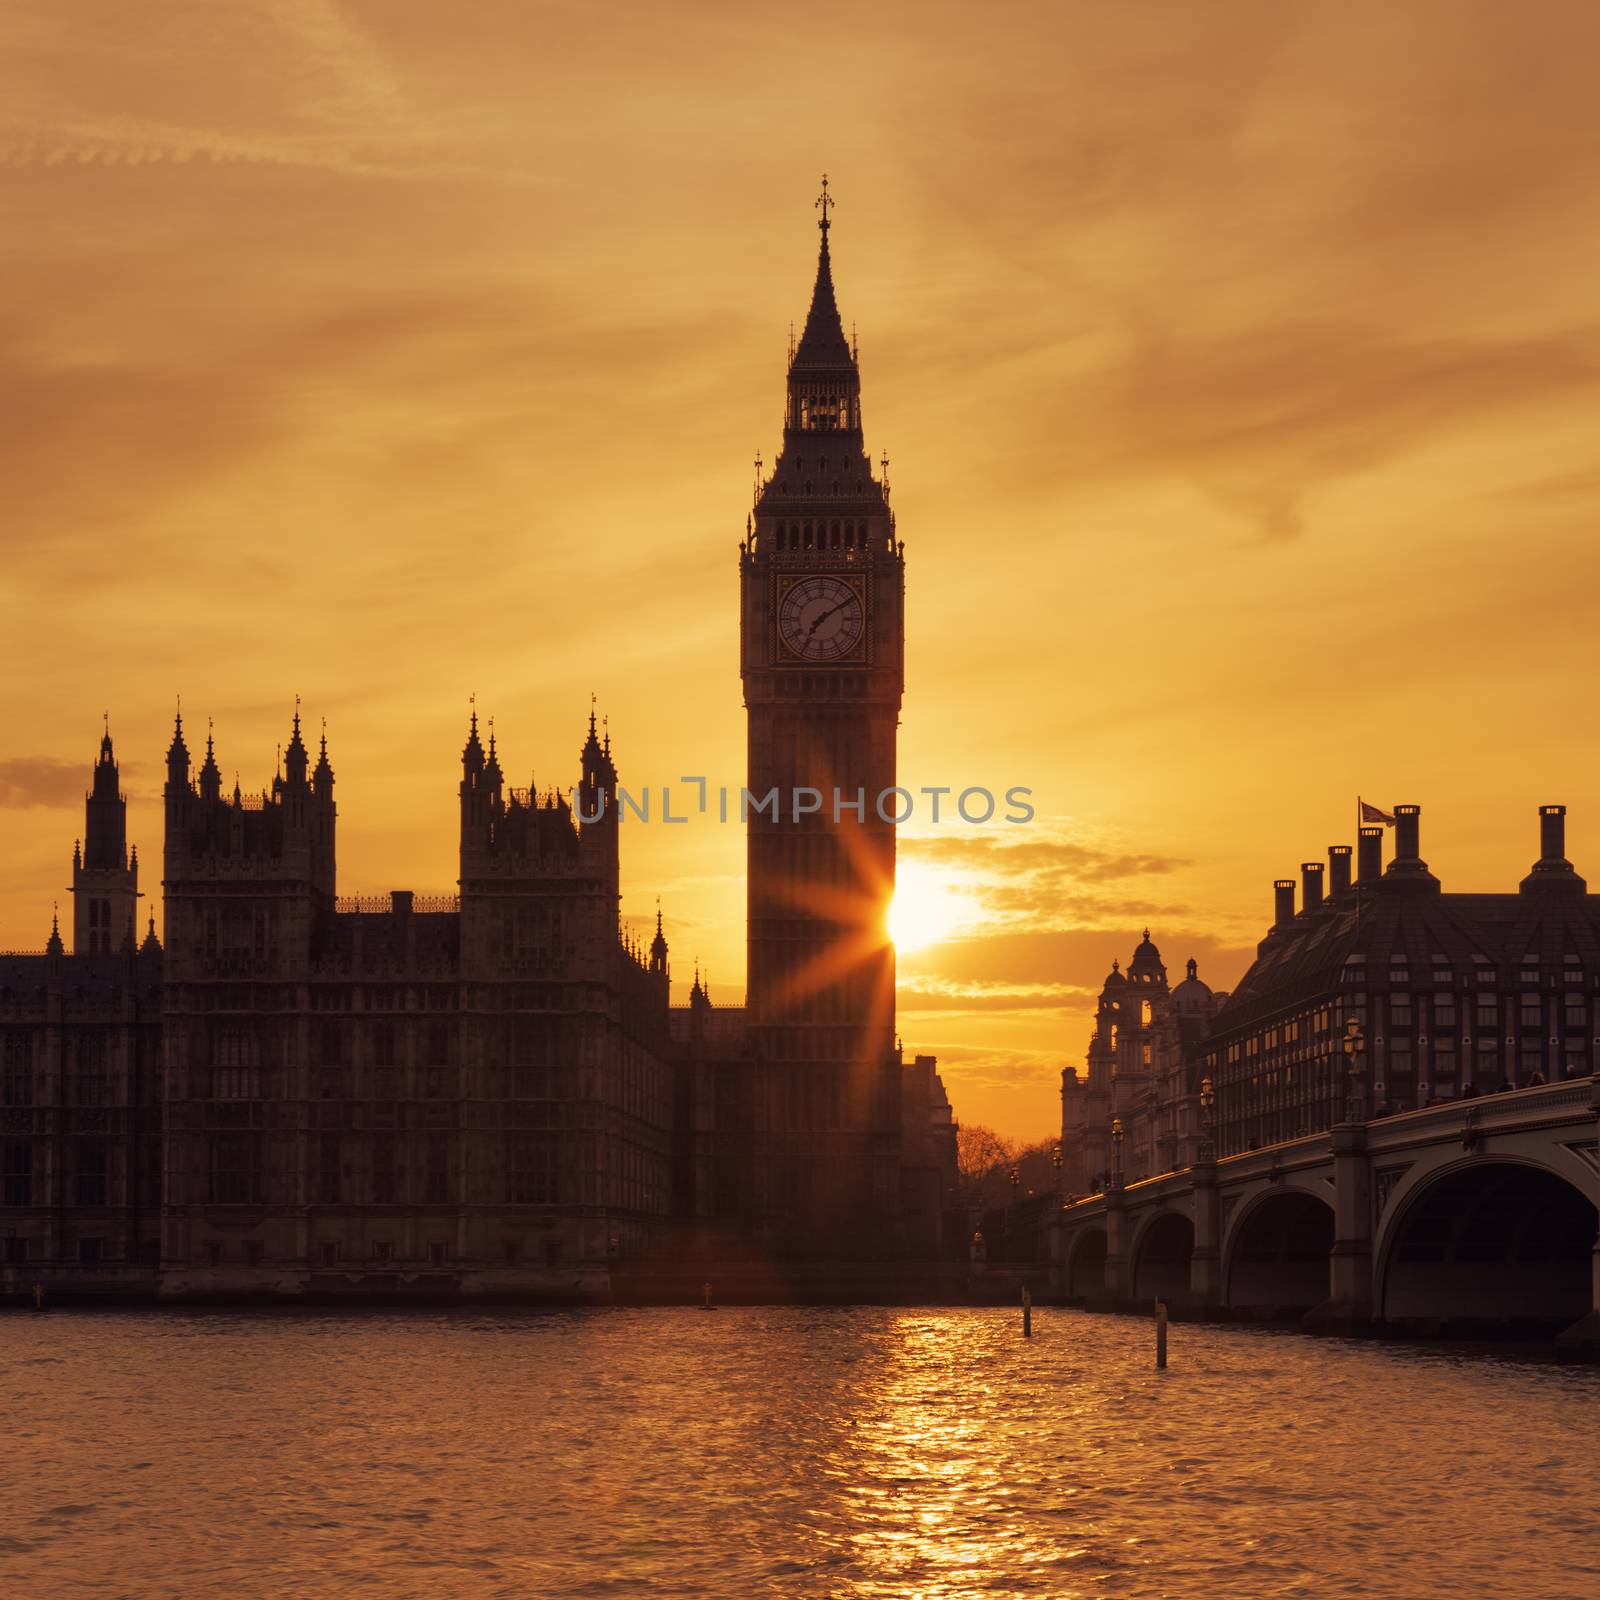 Big Ben clock tower in London at sunset, UK.